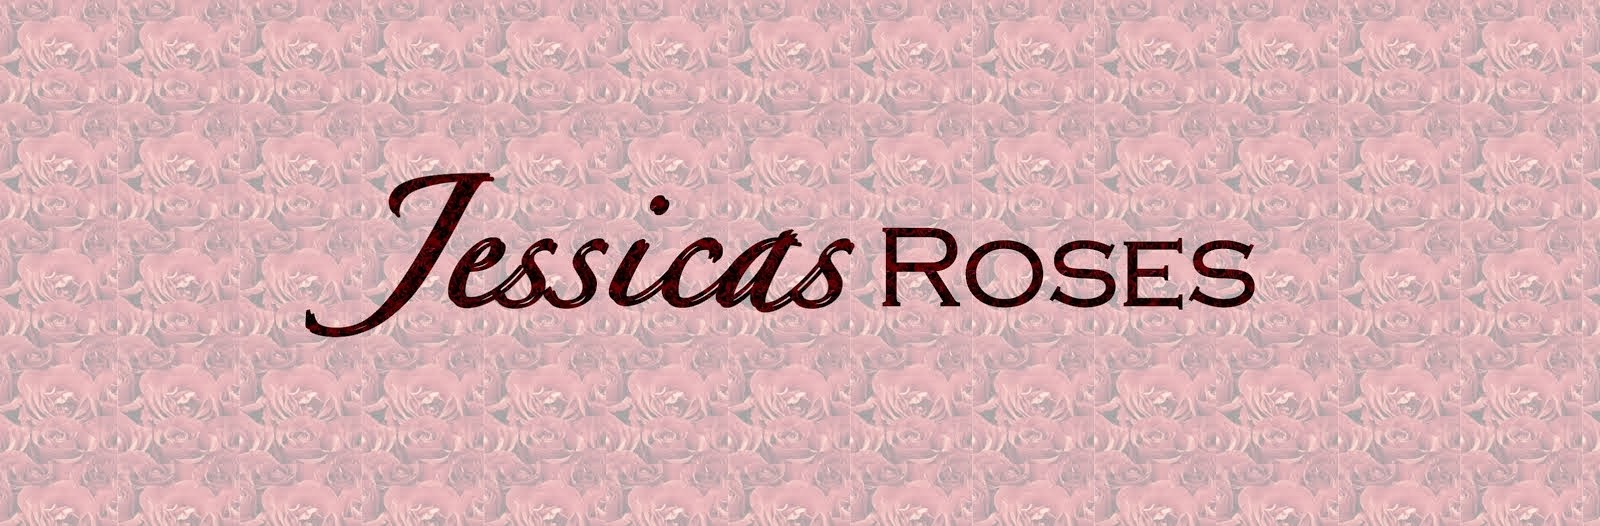 Jessicas Roses